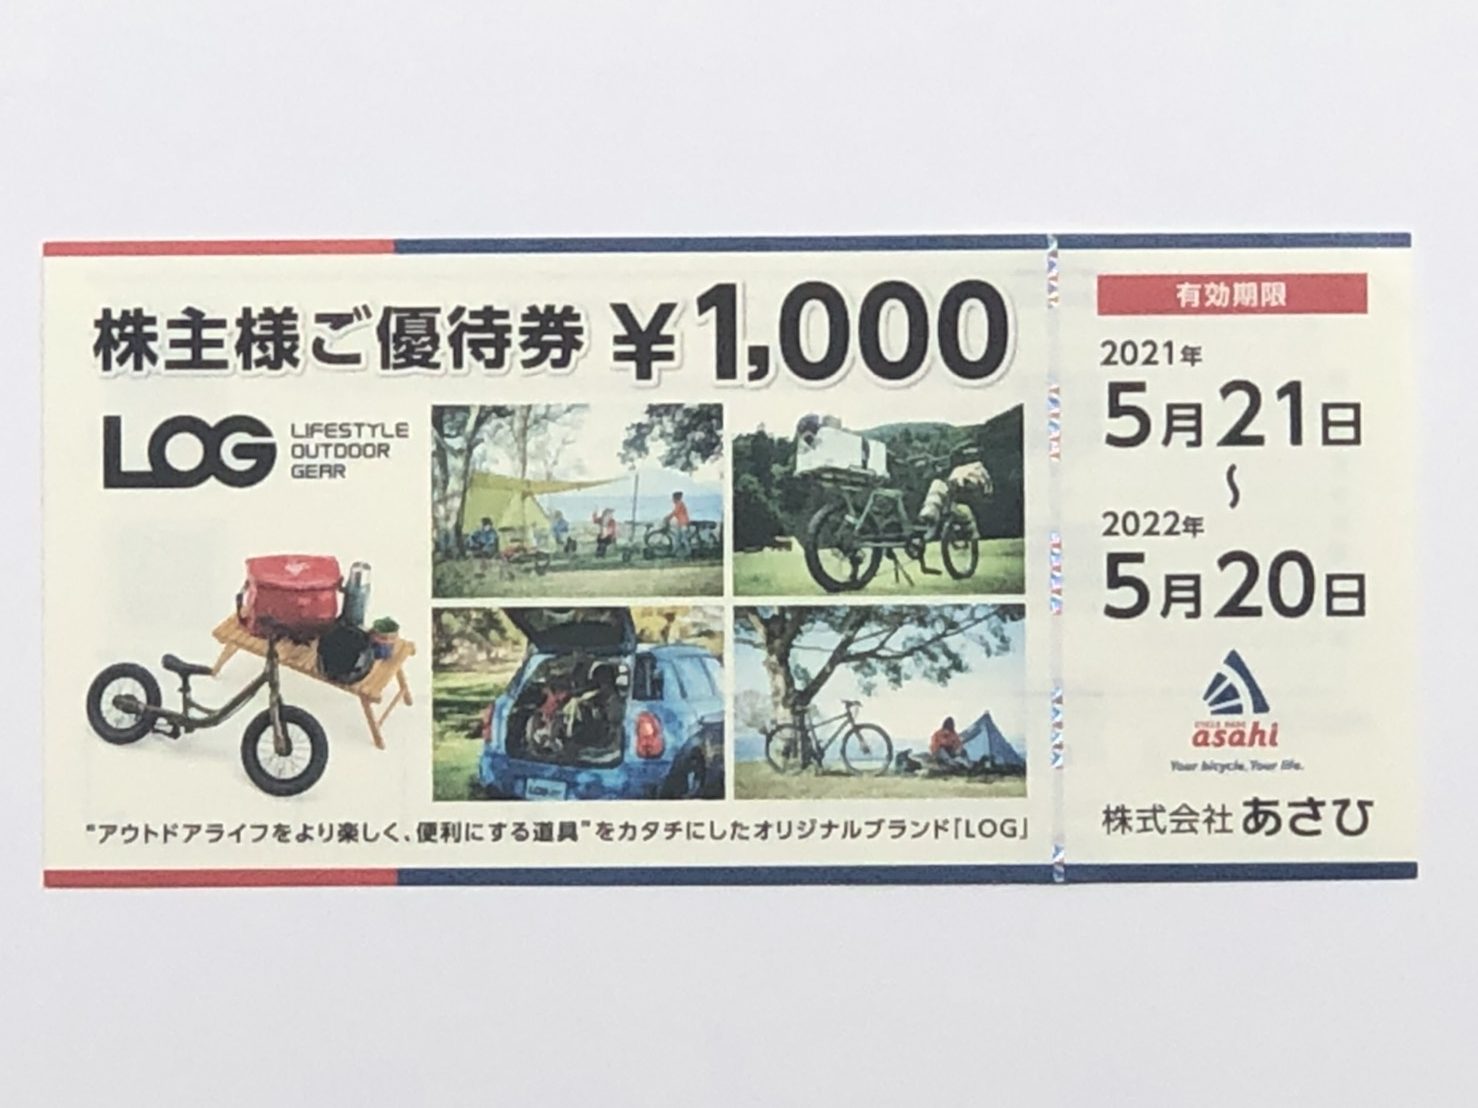 CYCLE BASE ASAHI ご優待券が入荷しました(^_^)v | サンデー | 札幌の 